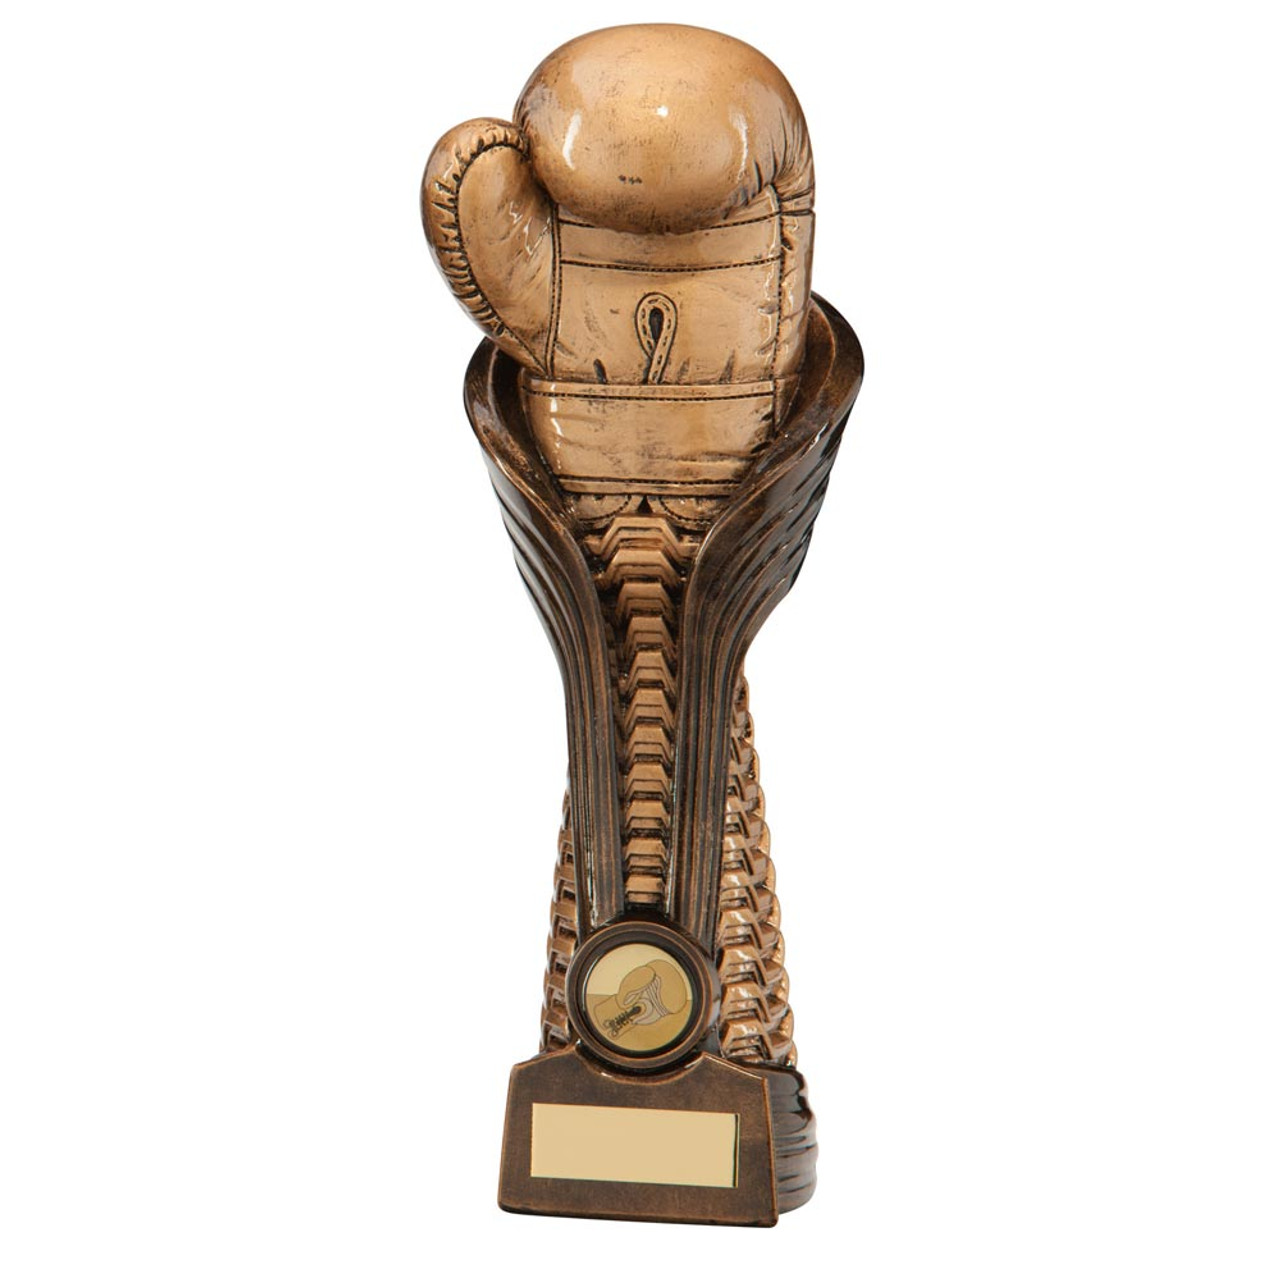 Gauntlet Boxing Glove Trophy Martial Arts Award